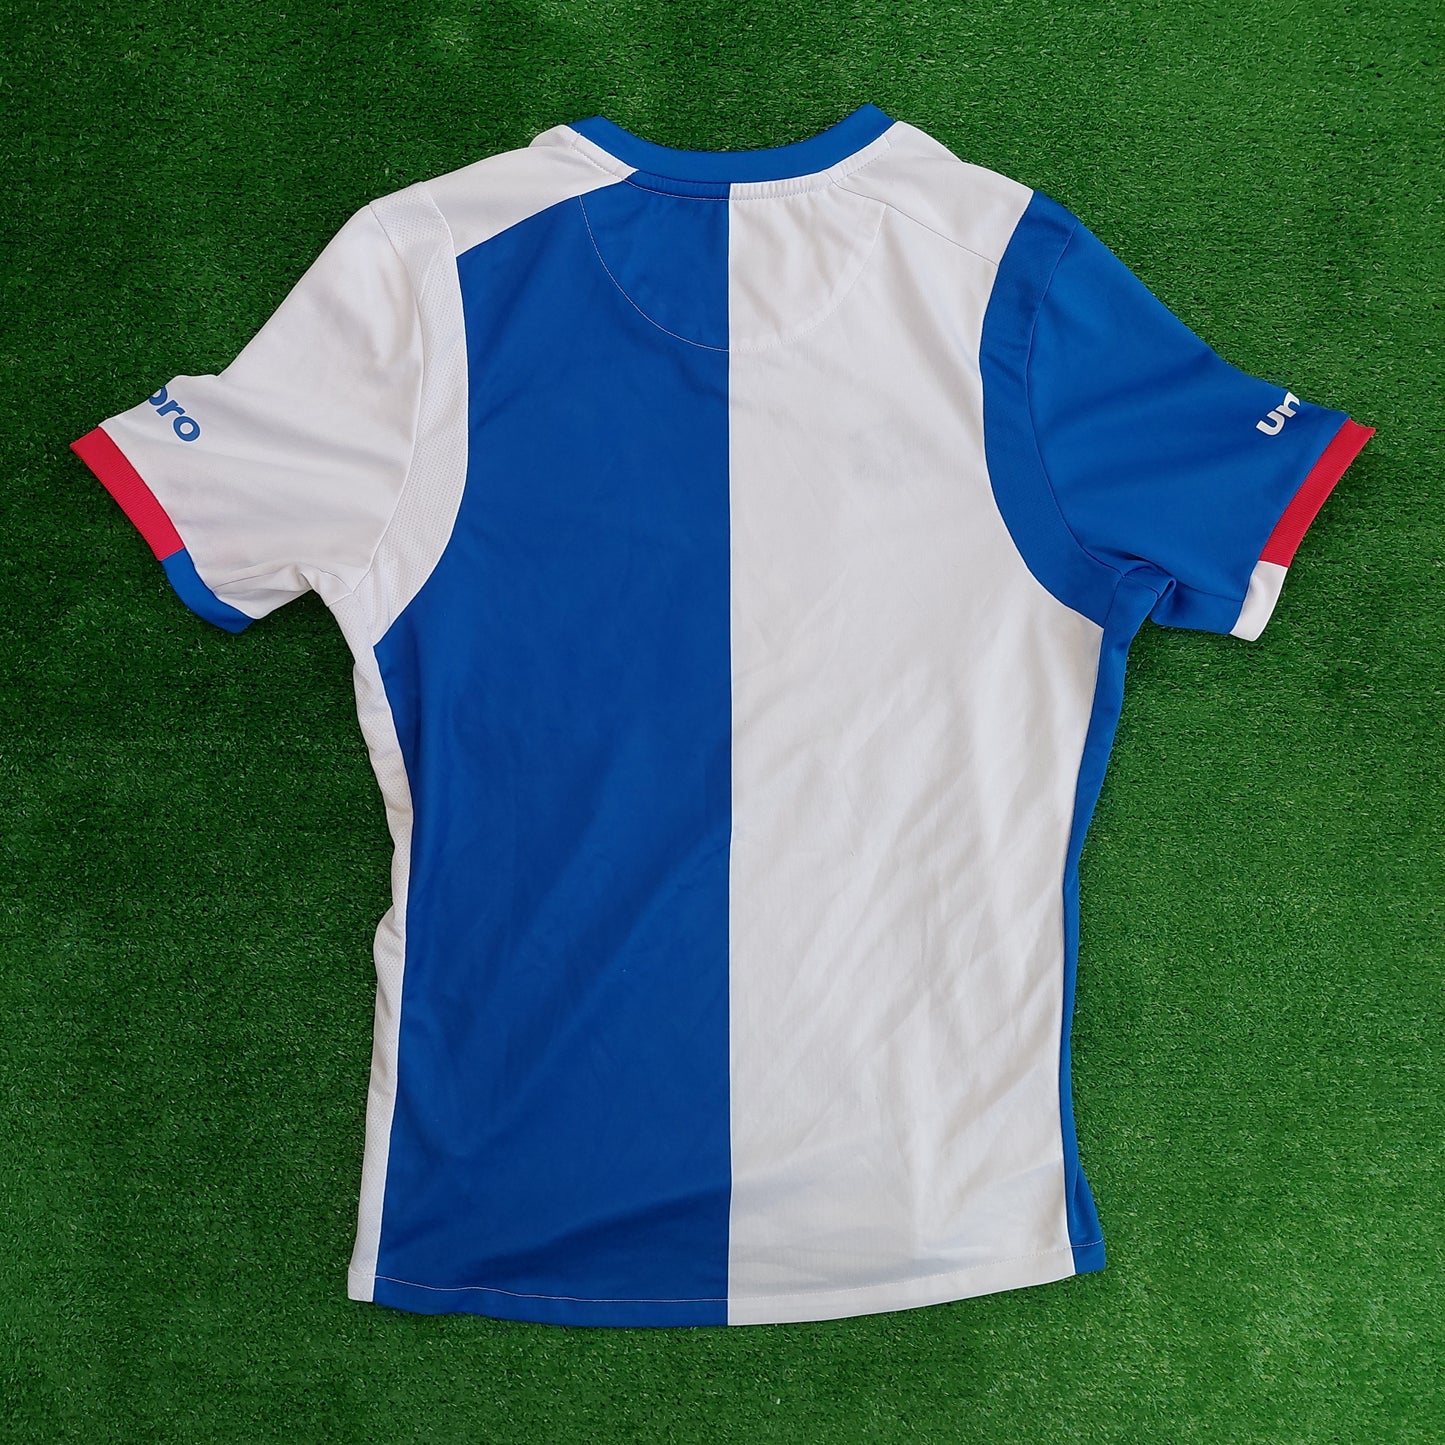 Blackburn Rovers 2016/17 Home Shirt (Excellent) - Size S